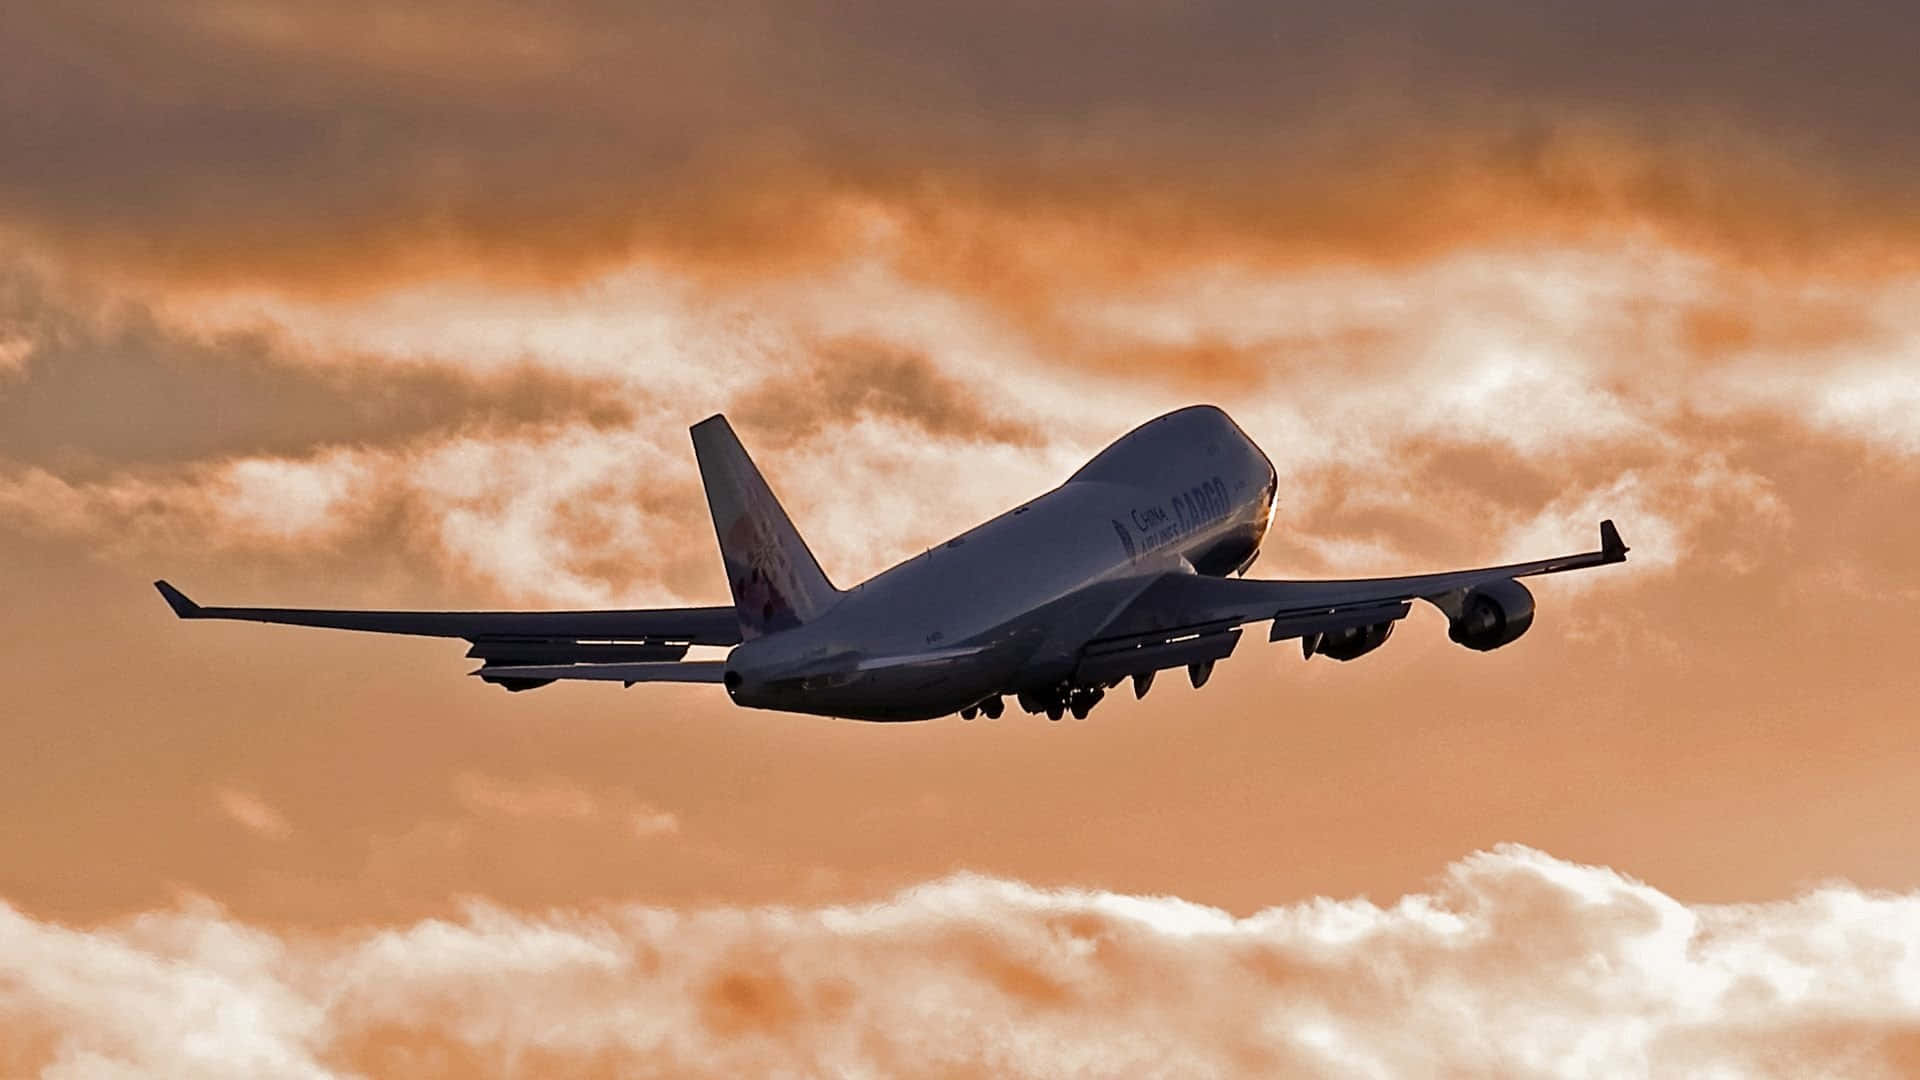  Boeing Hintergrundbild 1920x1080. Download “Climb Aboard a Classic: A Boeing 747 Airliner in Flight” Wallpaper